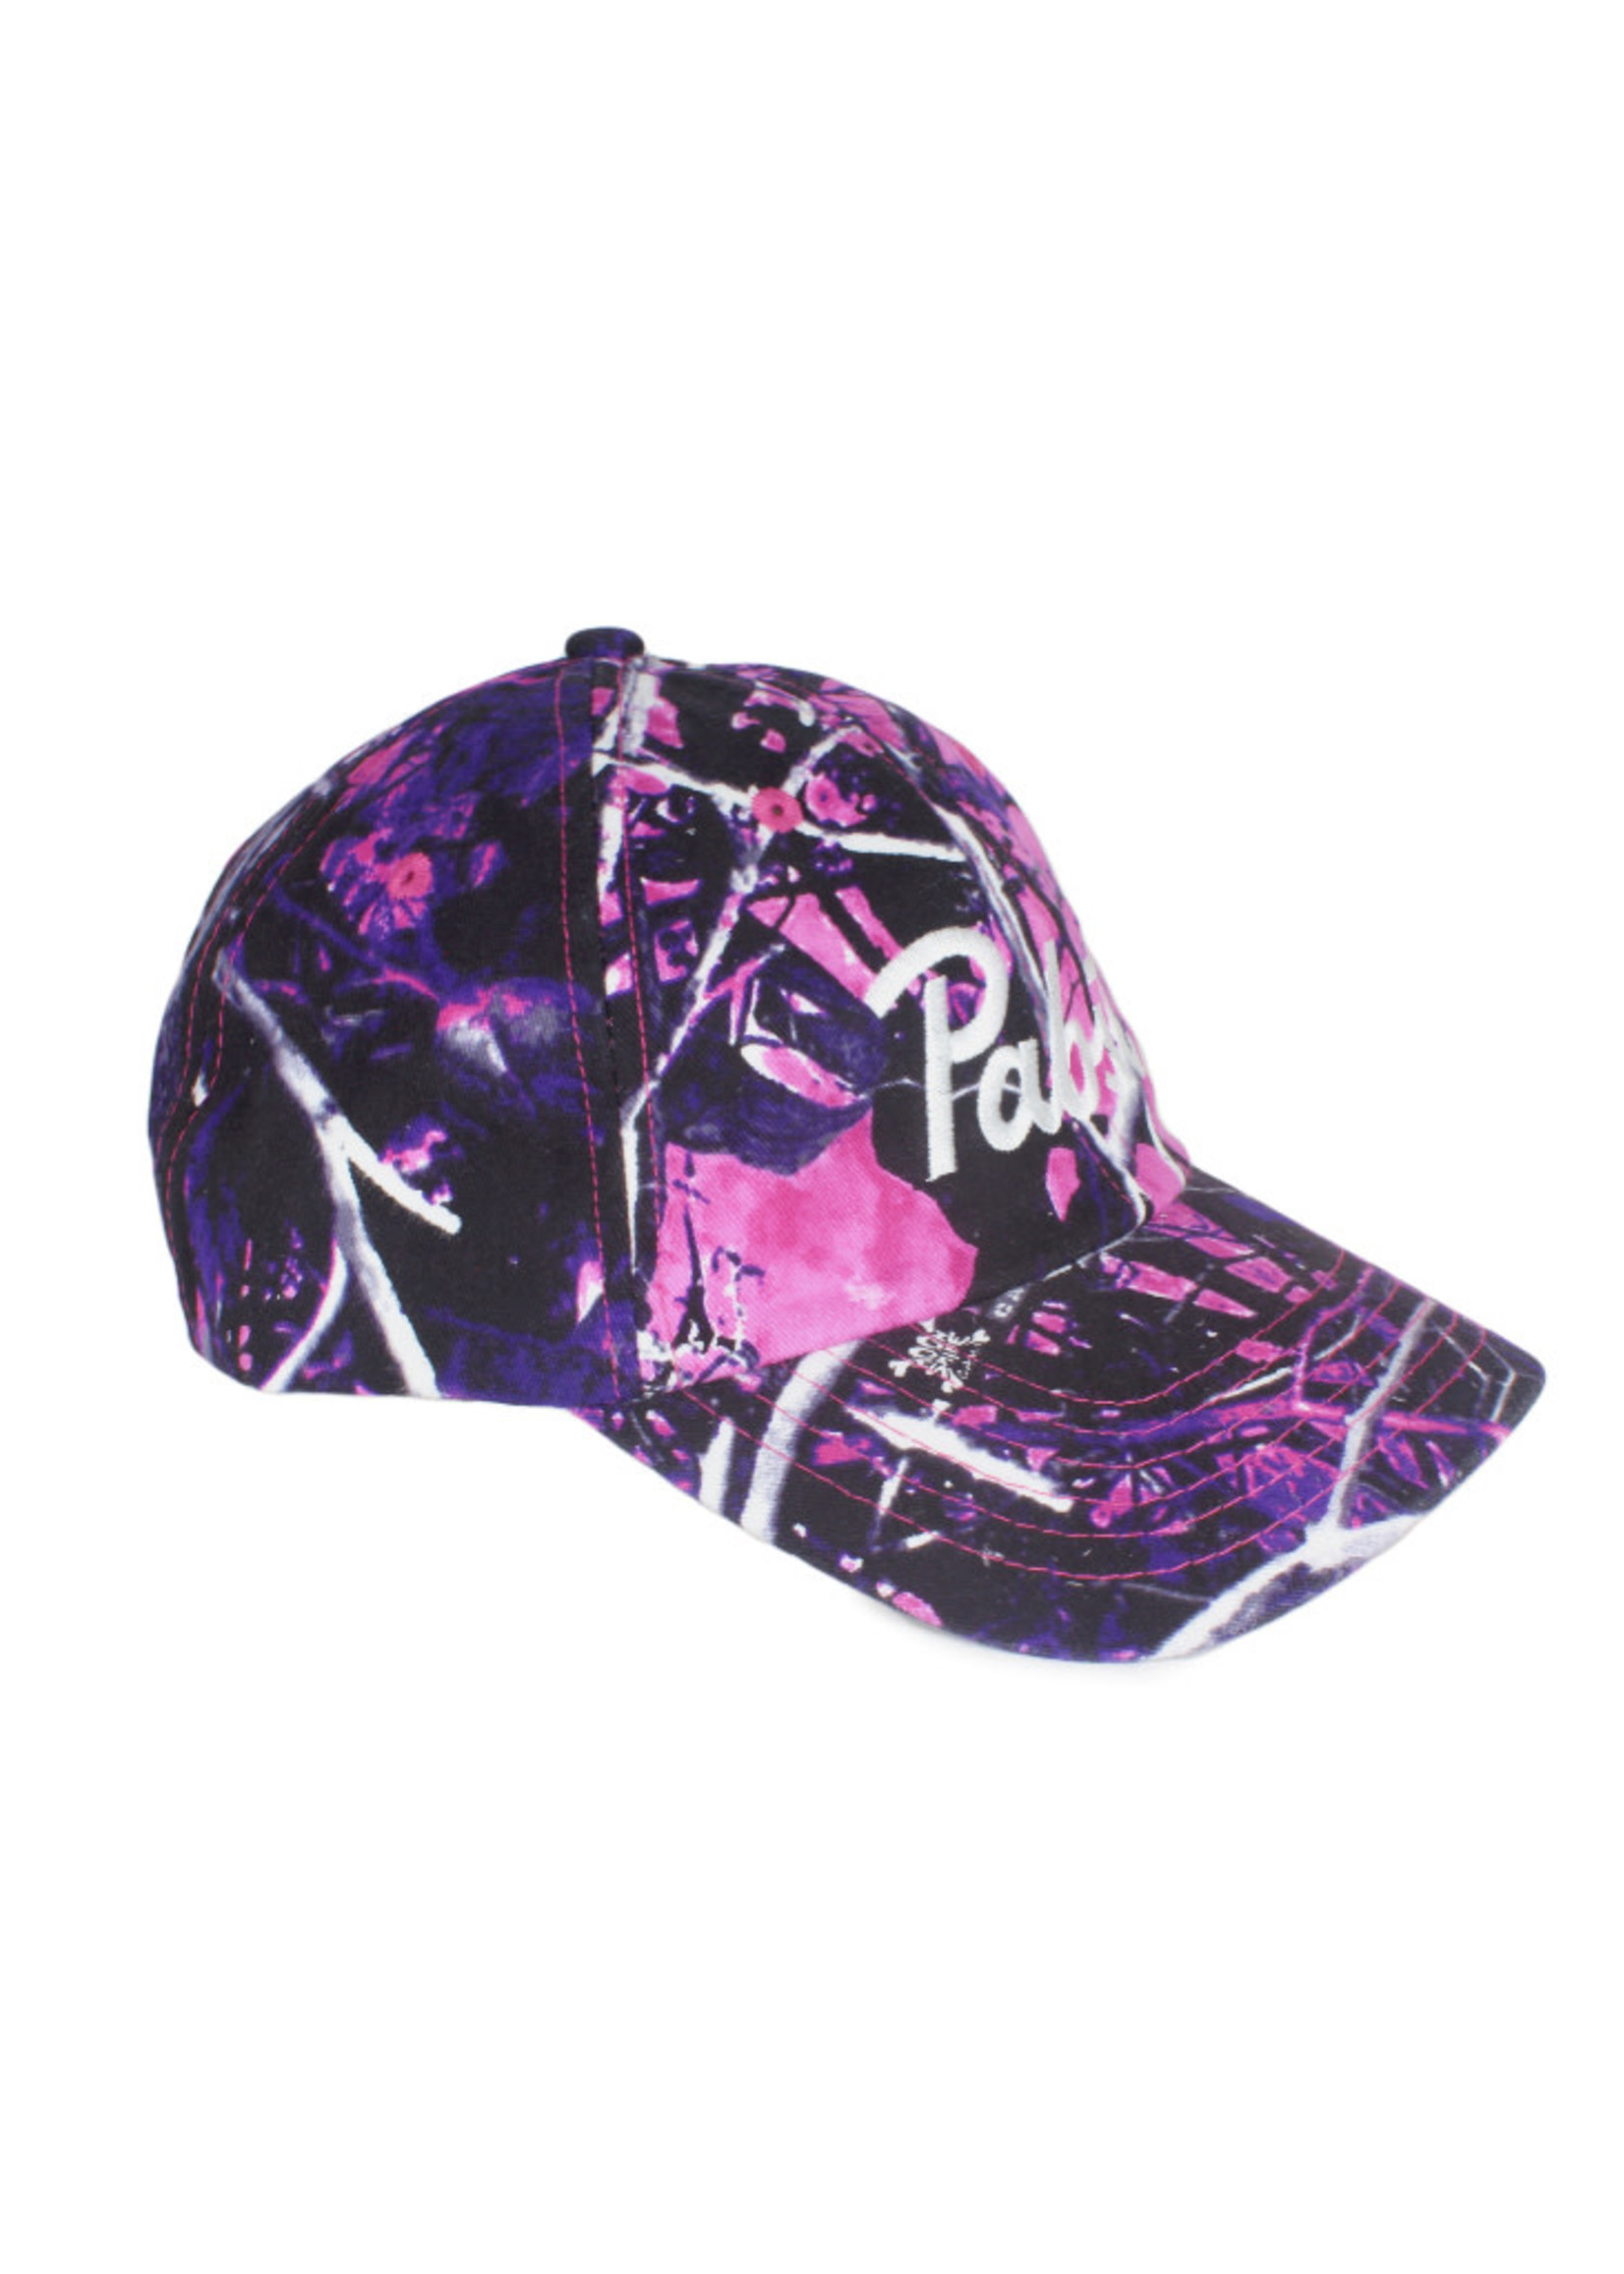 Pabst Pabst Pink Camo Cap